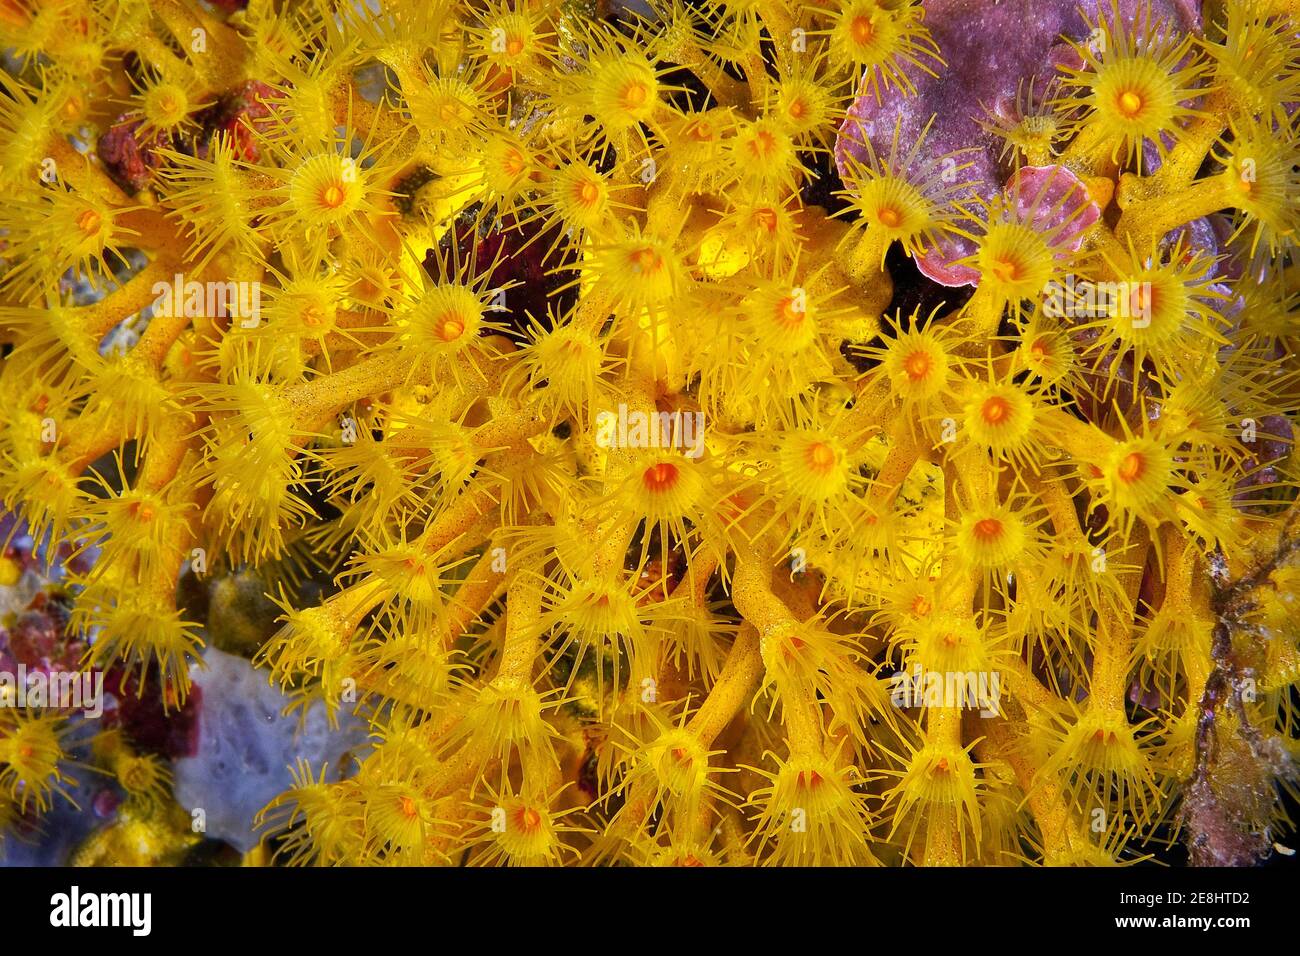 Polyps of yellow crustose anemones (Parazoanthus axinellae), Mediterranean Sea Stock Photo